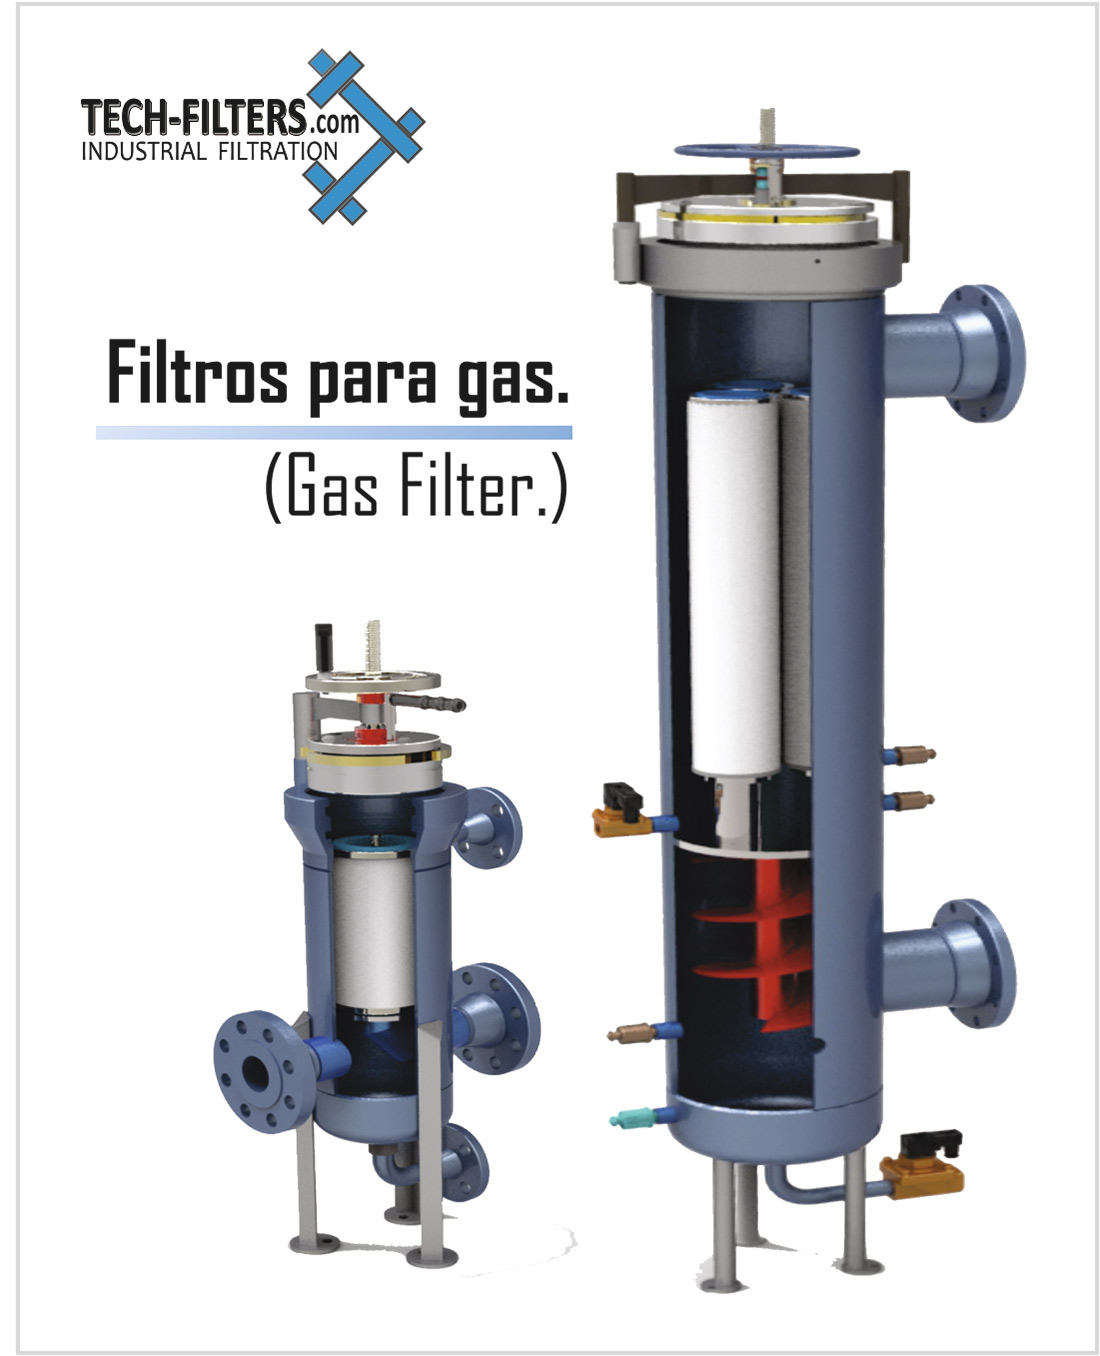 Filtro industrial para gas natural. Tech-Filters